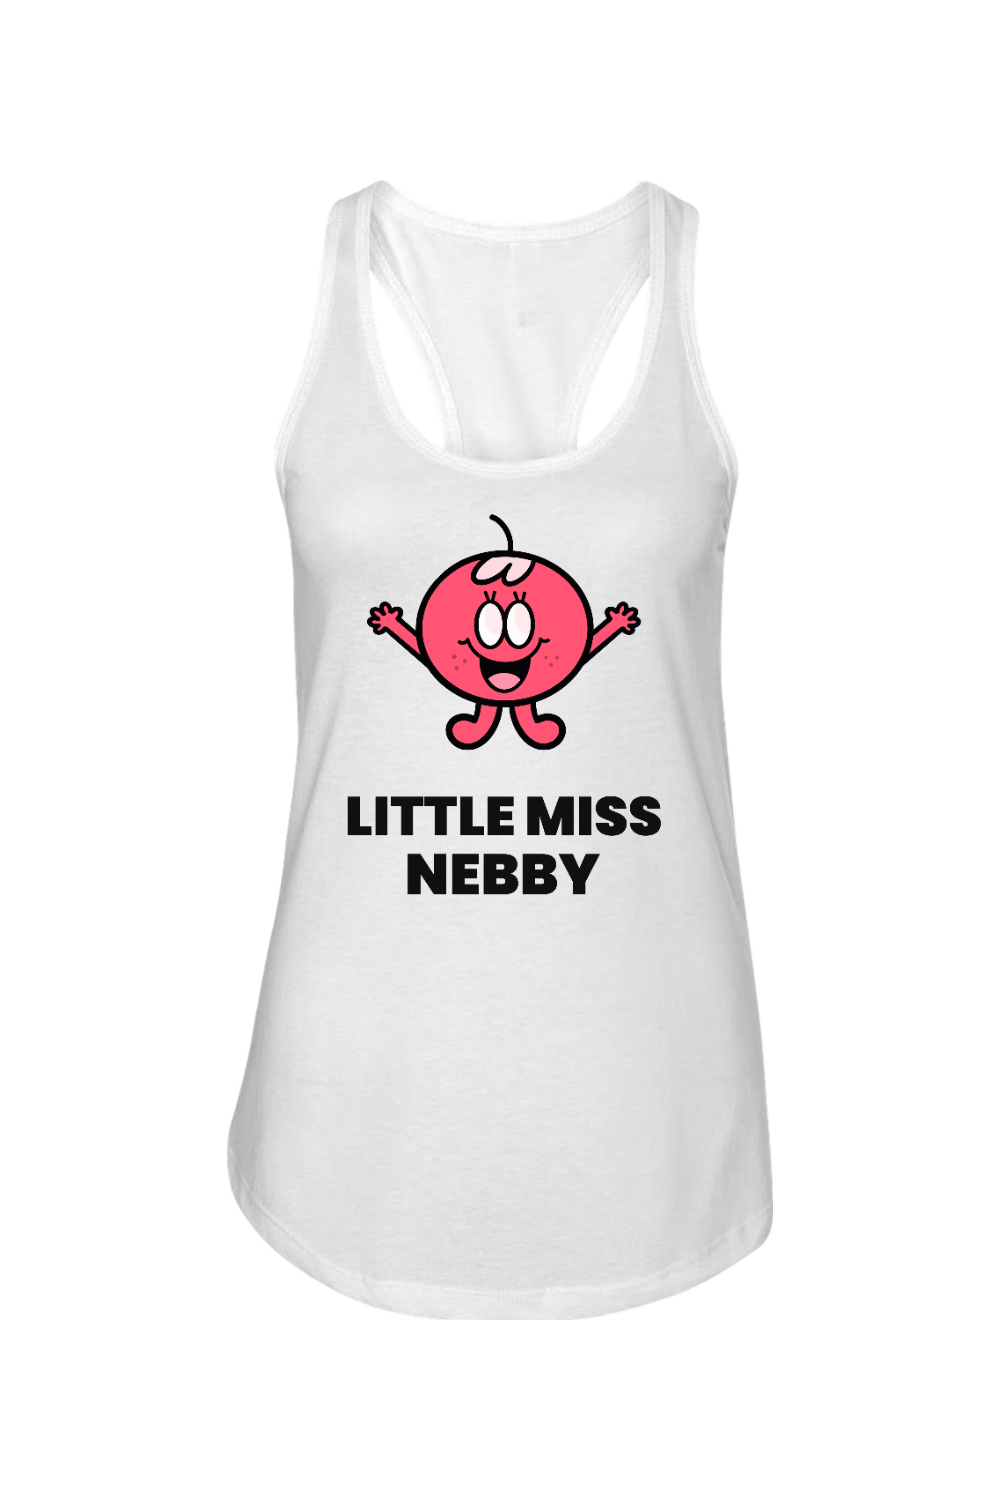 Little Miss Nebby - Ladies Racerback Tank - Yinzylvania